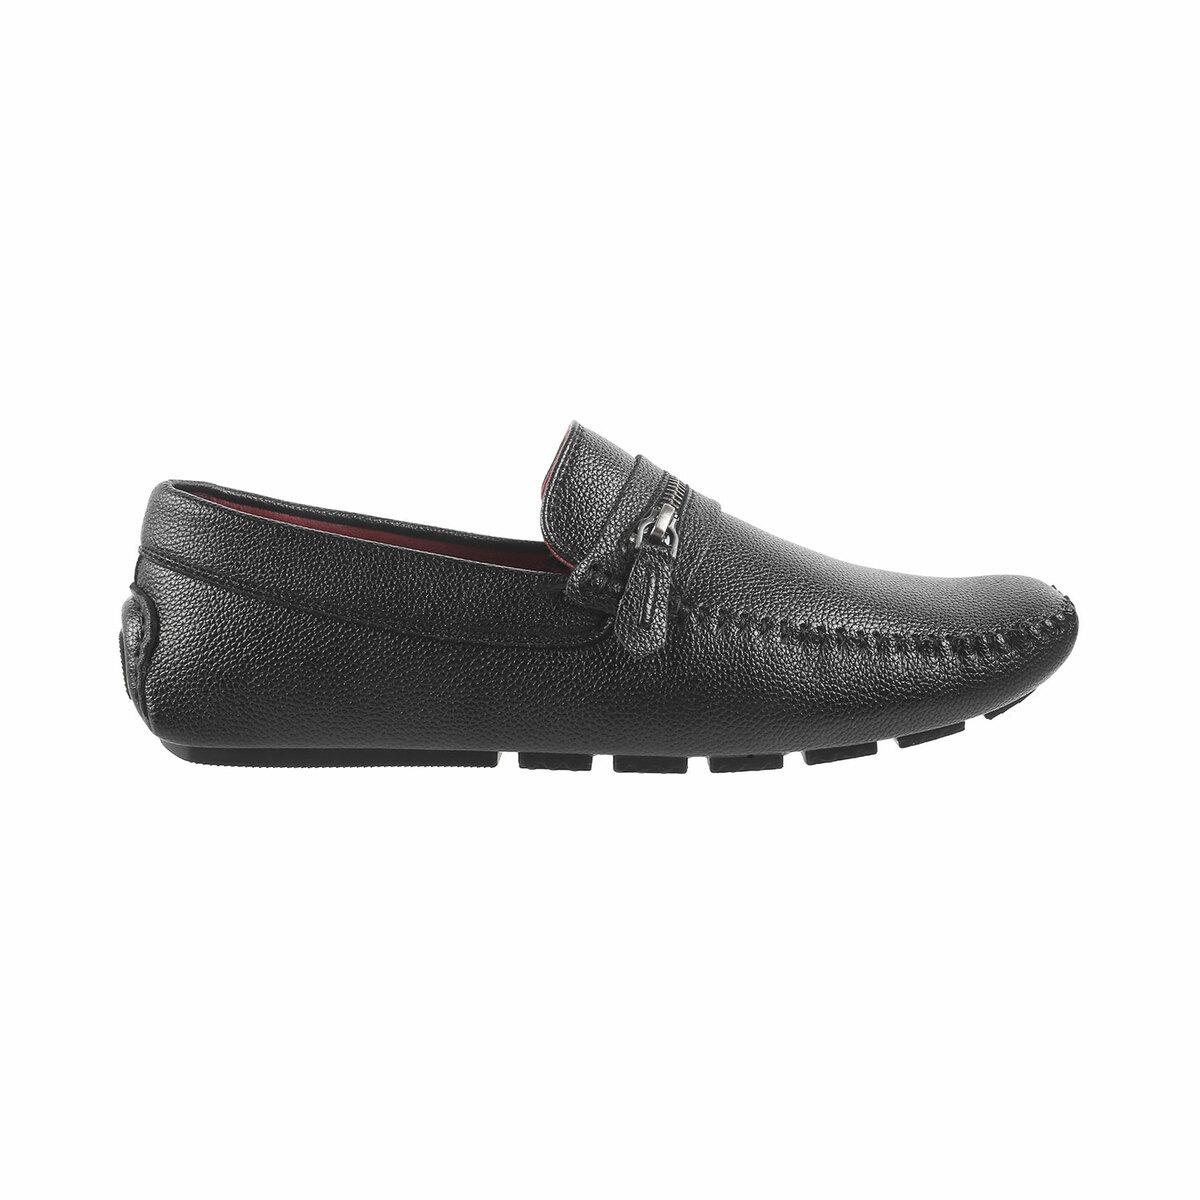 Buy Men Black Casual Loafers Online | SKU: 71-87-11-41-Metro Shoes